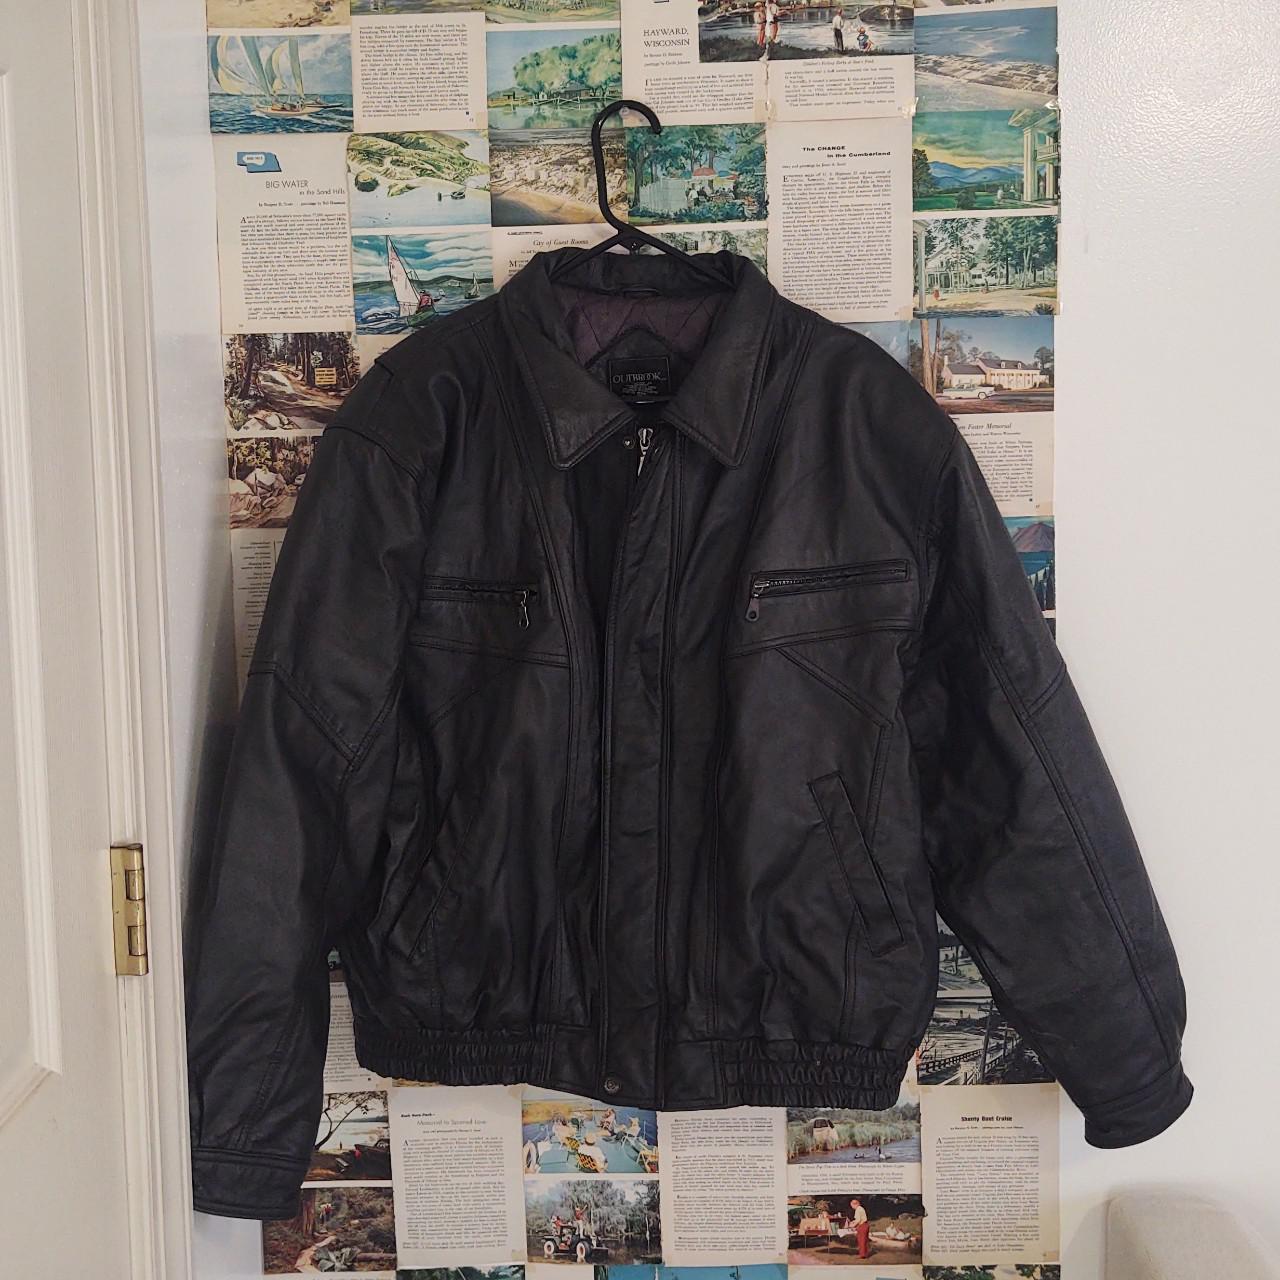 Product Image 1 - Outbrook black leather jacket size